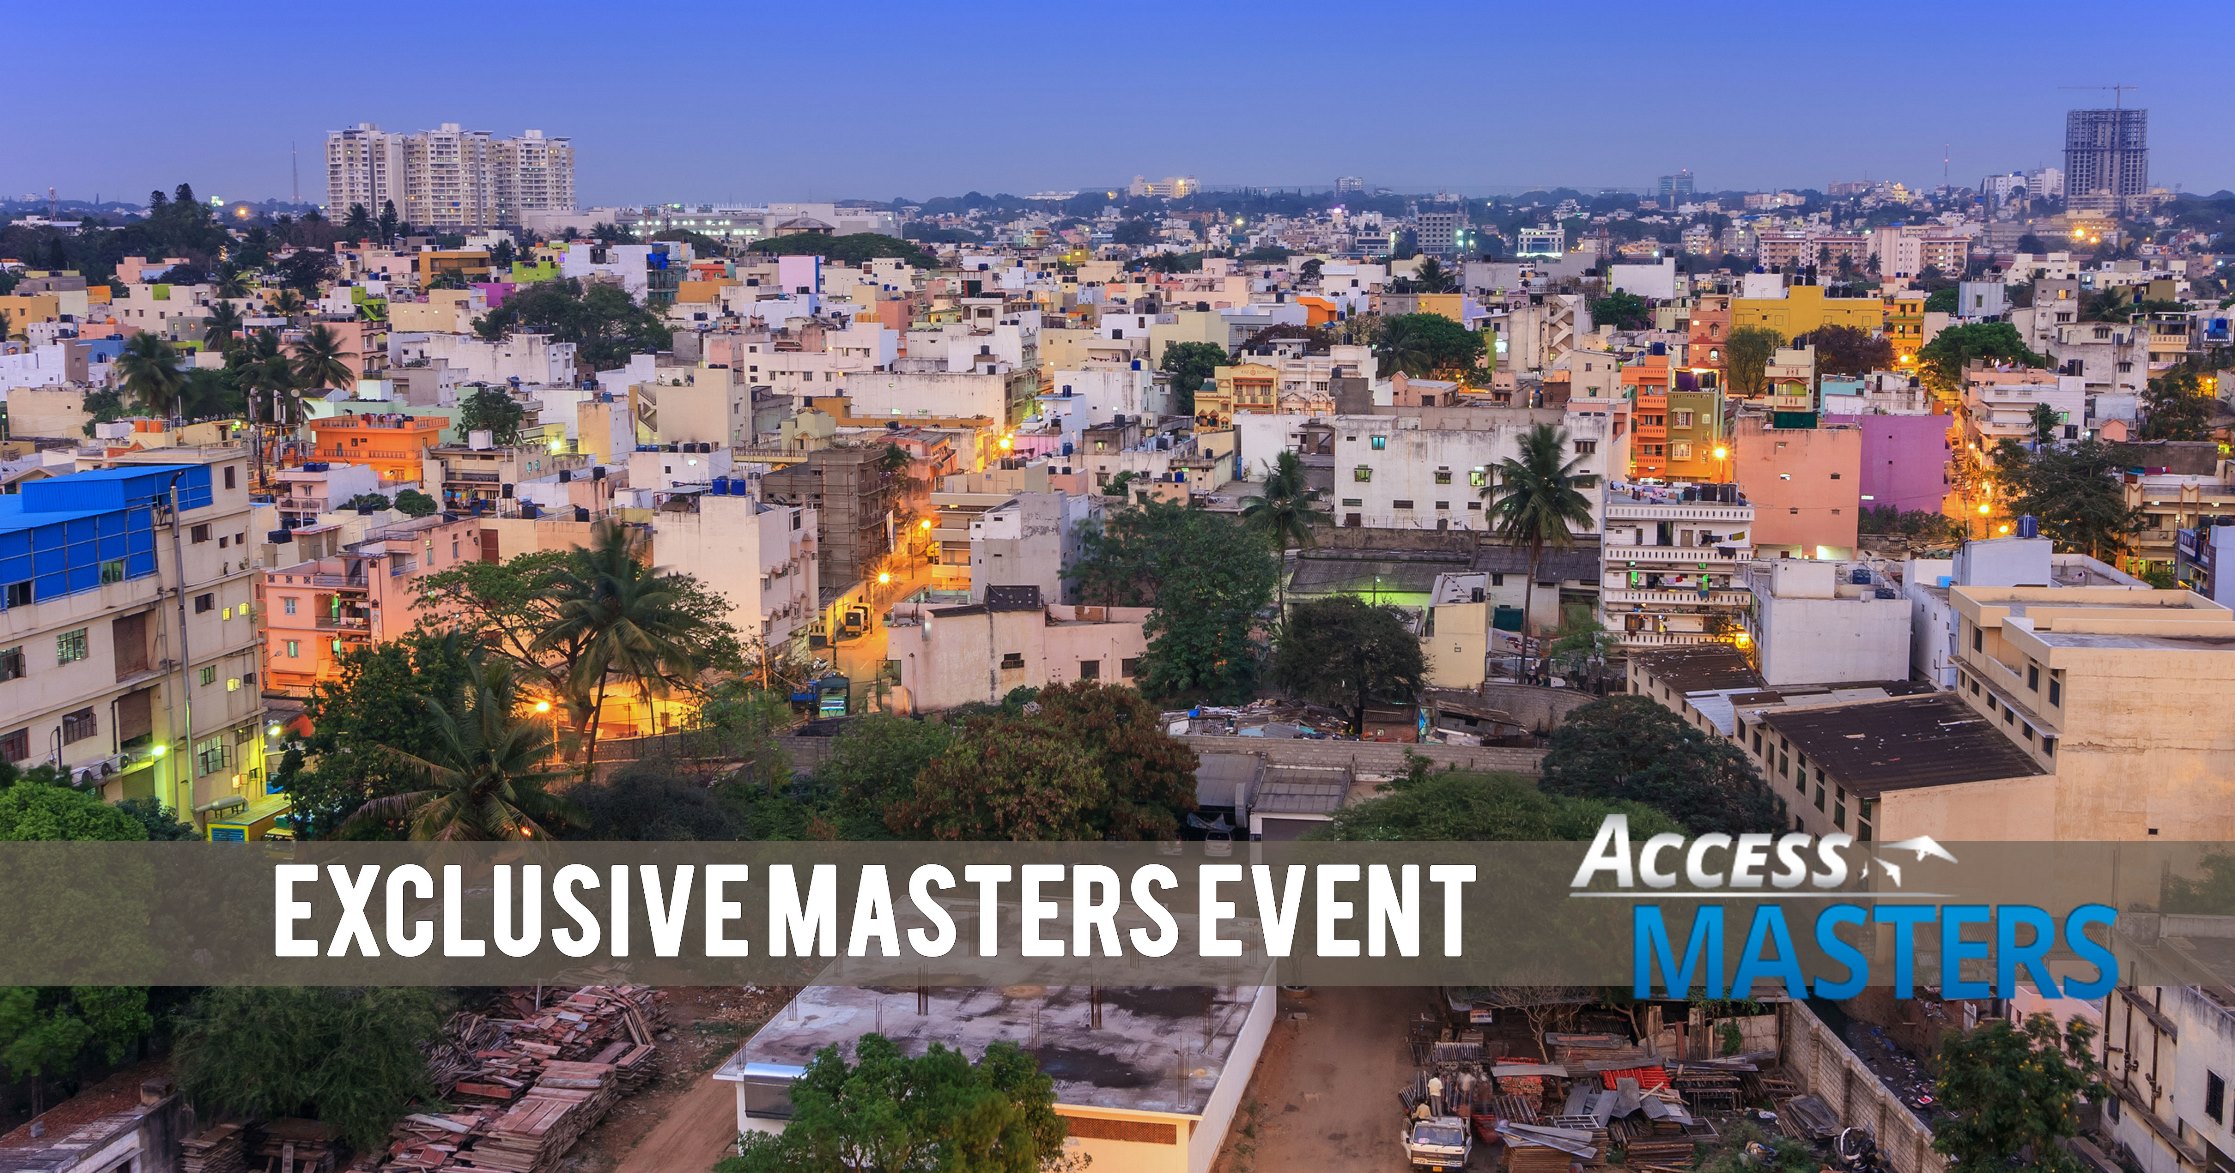 Meet top international Master’s programmes in Bangalore on February 19th, Bangalore, Karnataka, India